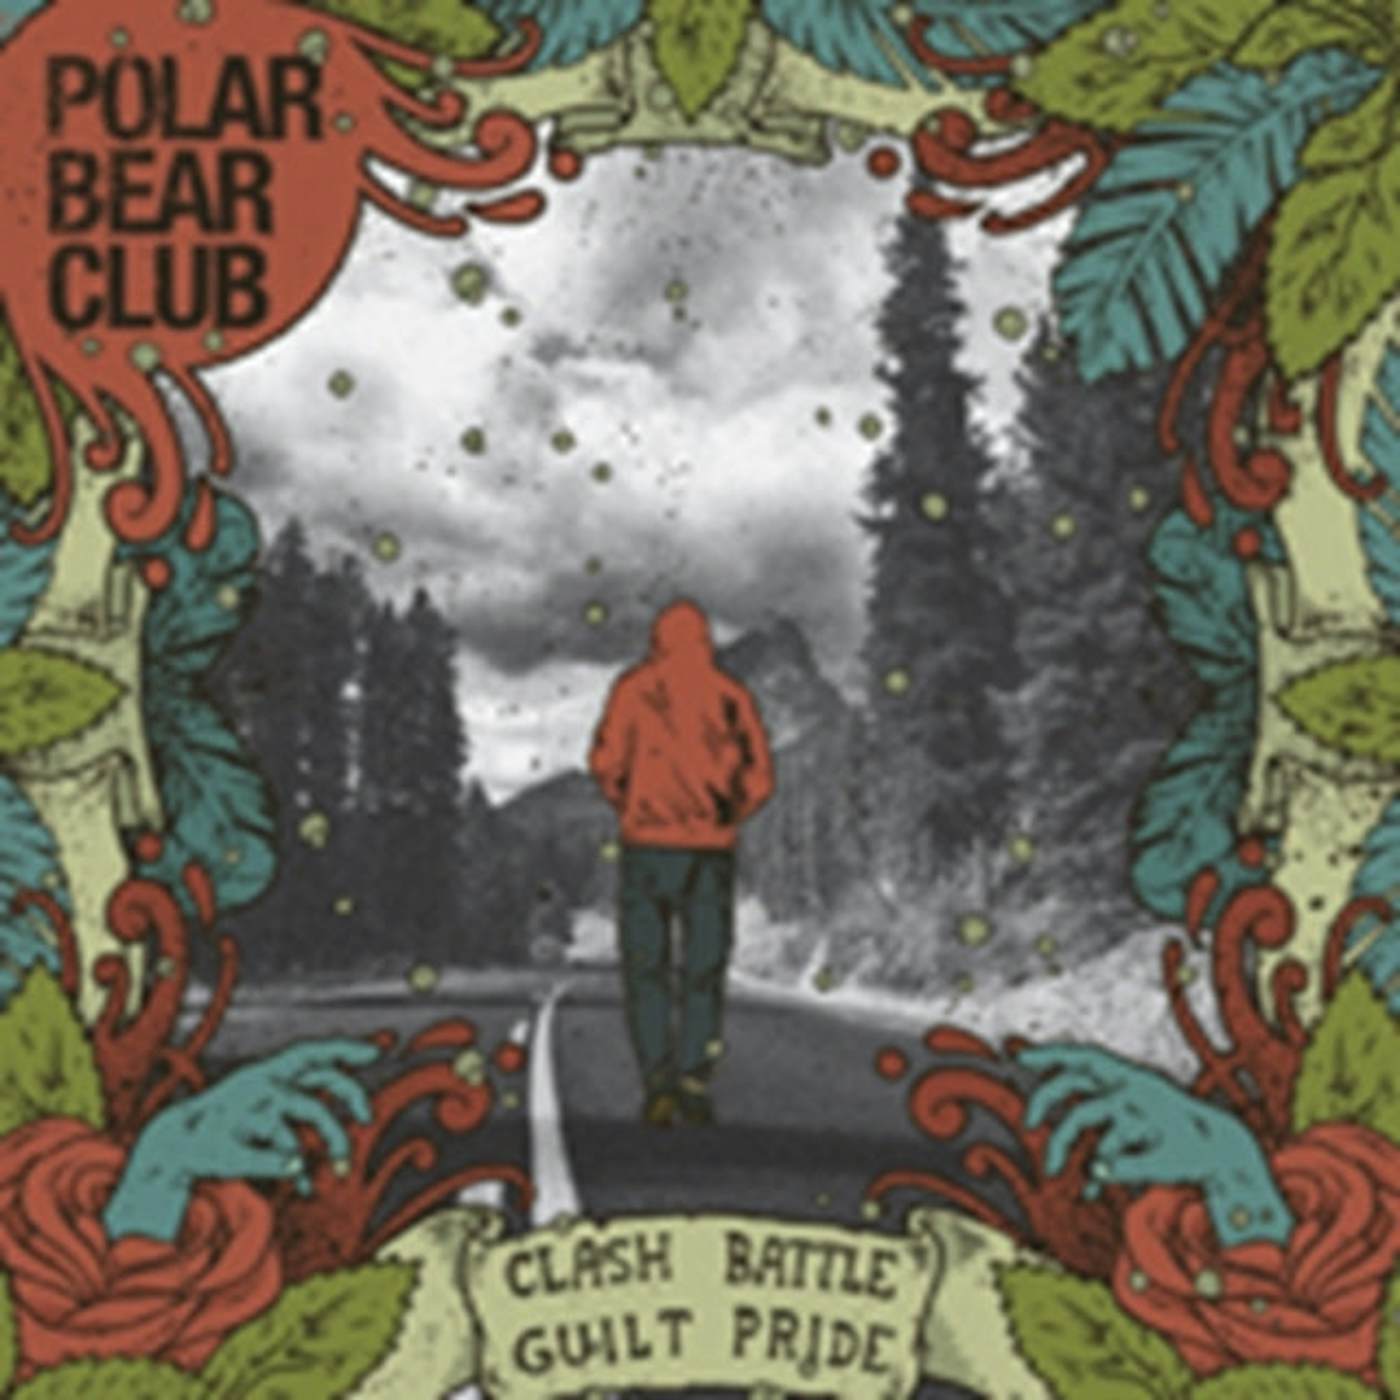 Polar Bear Club CD - Clash Battle Guilt Pride